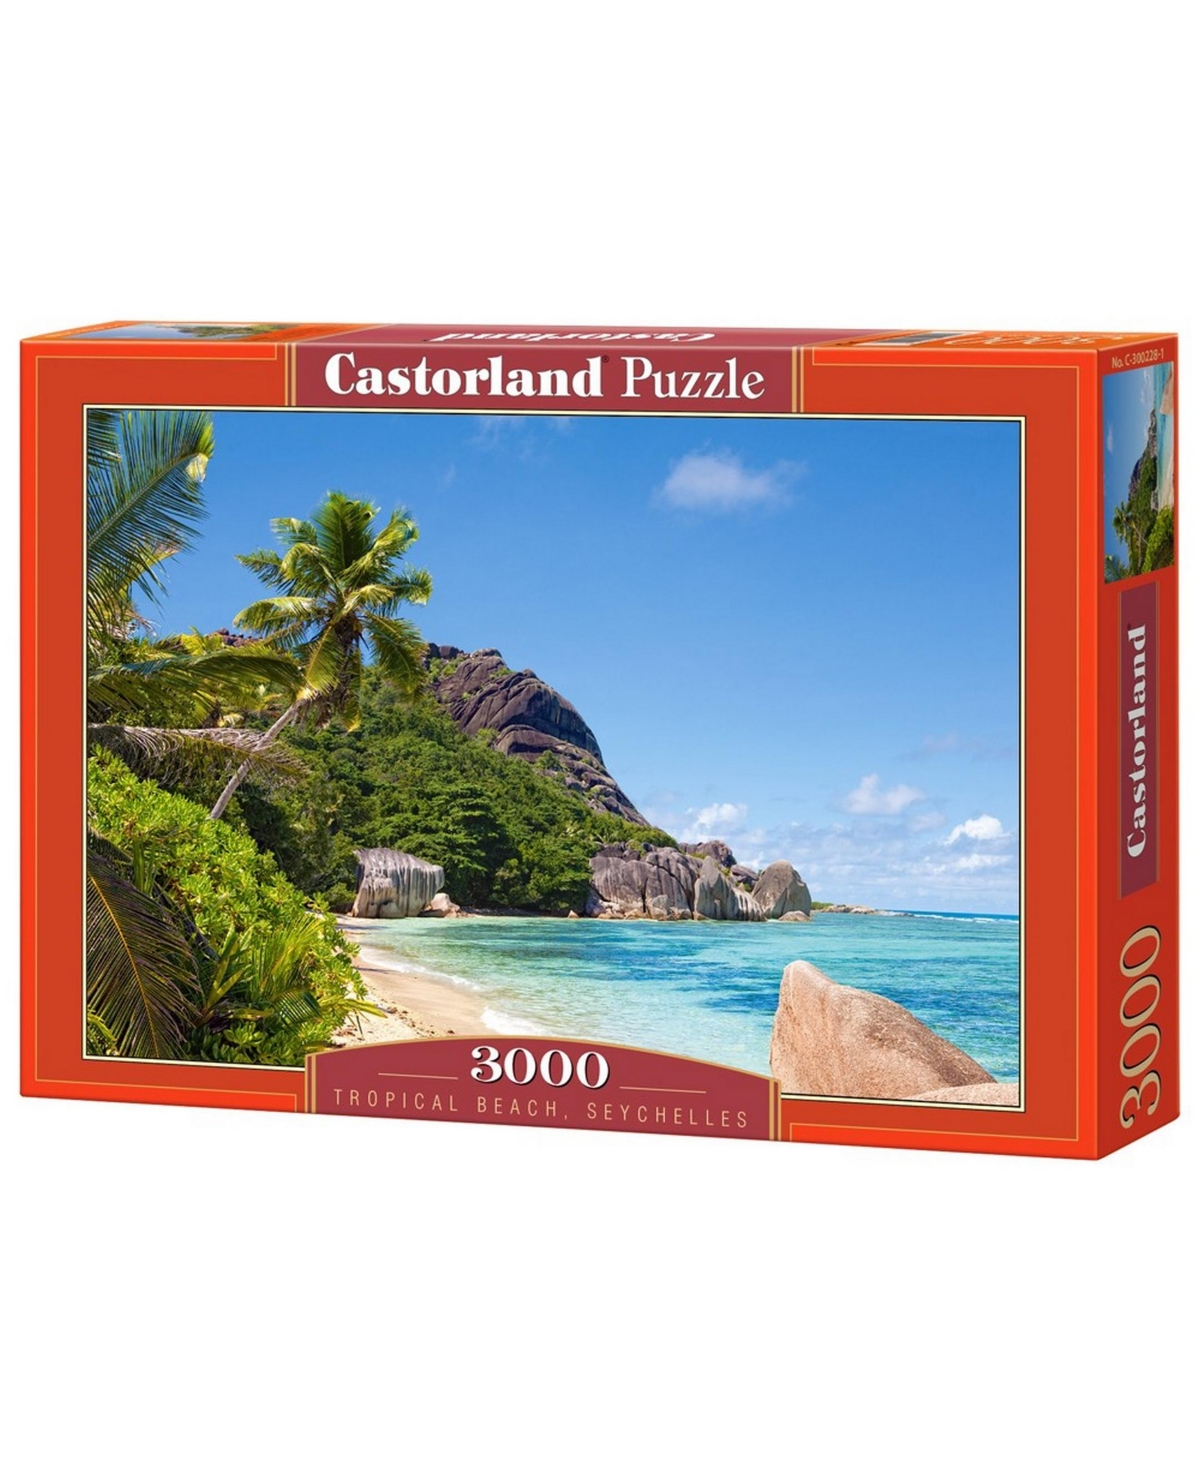 Castorland Tropical Beach, Seychelles Jigsaw Puzzle Set, 3000 Piece In Multicolor